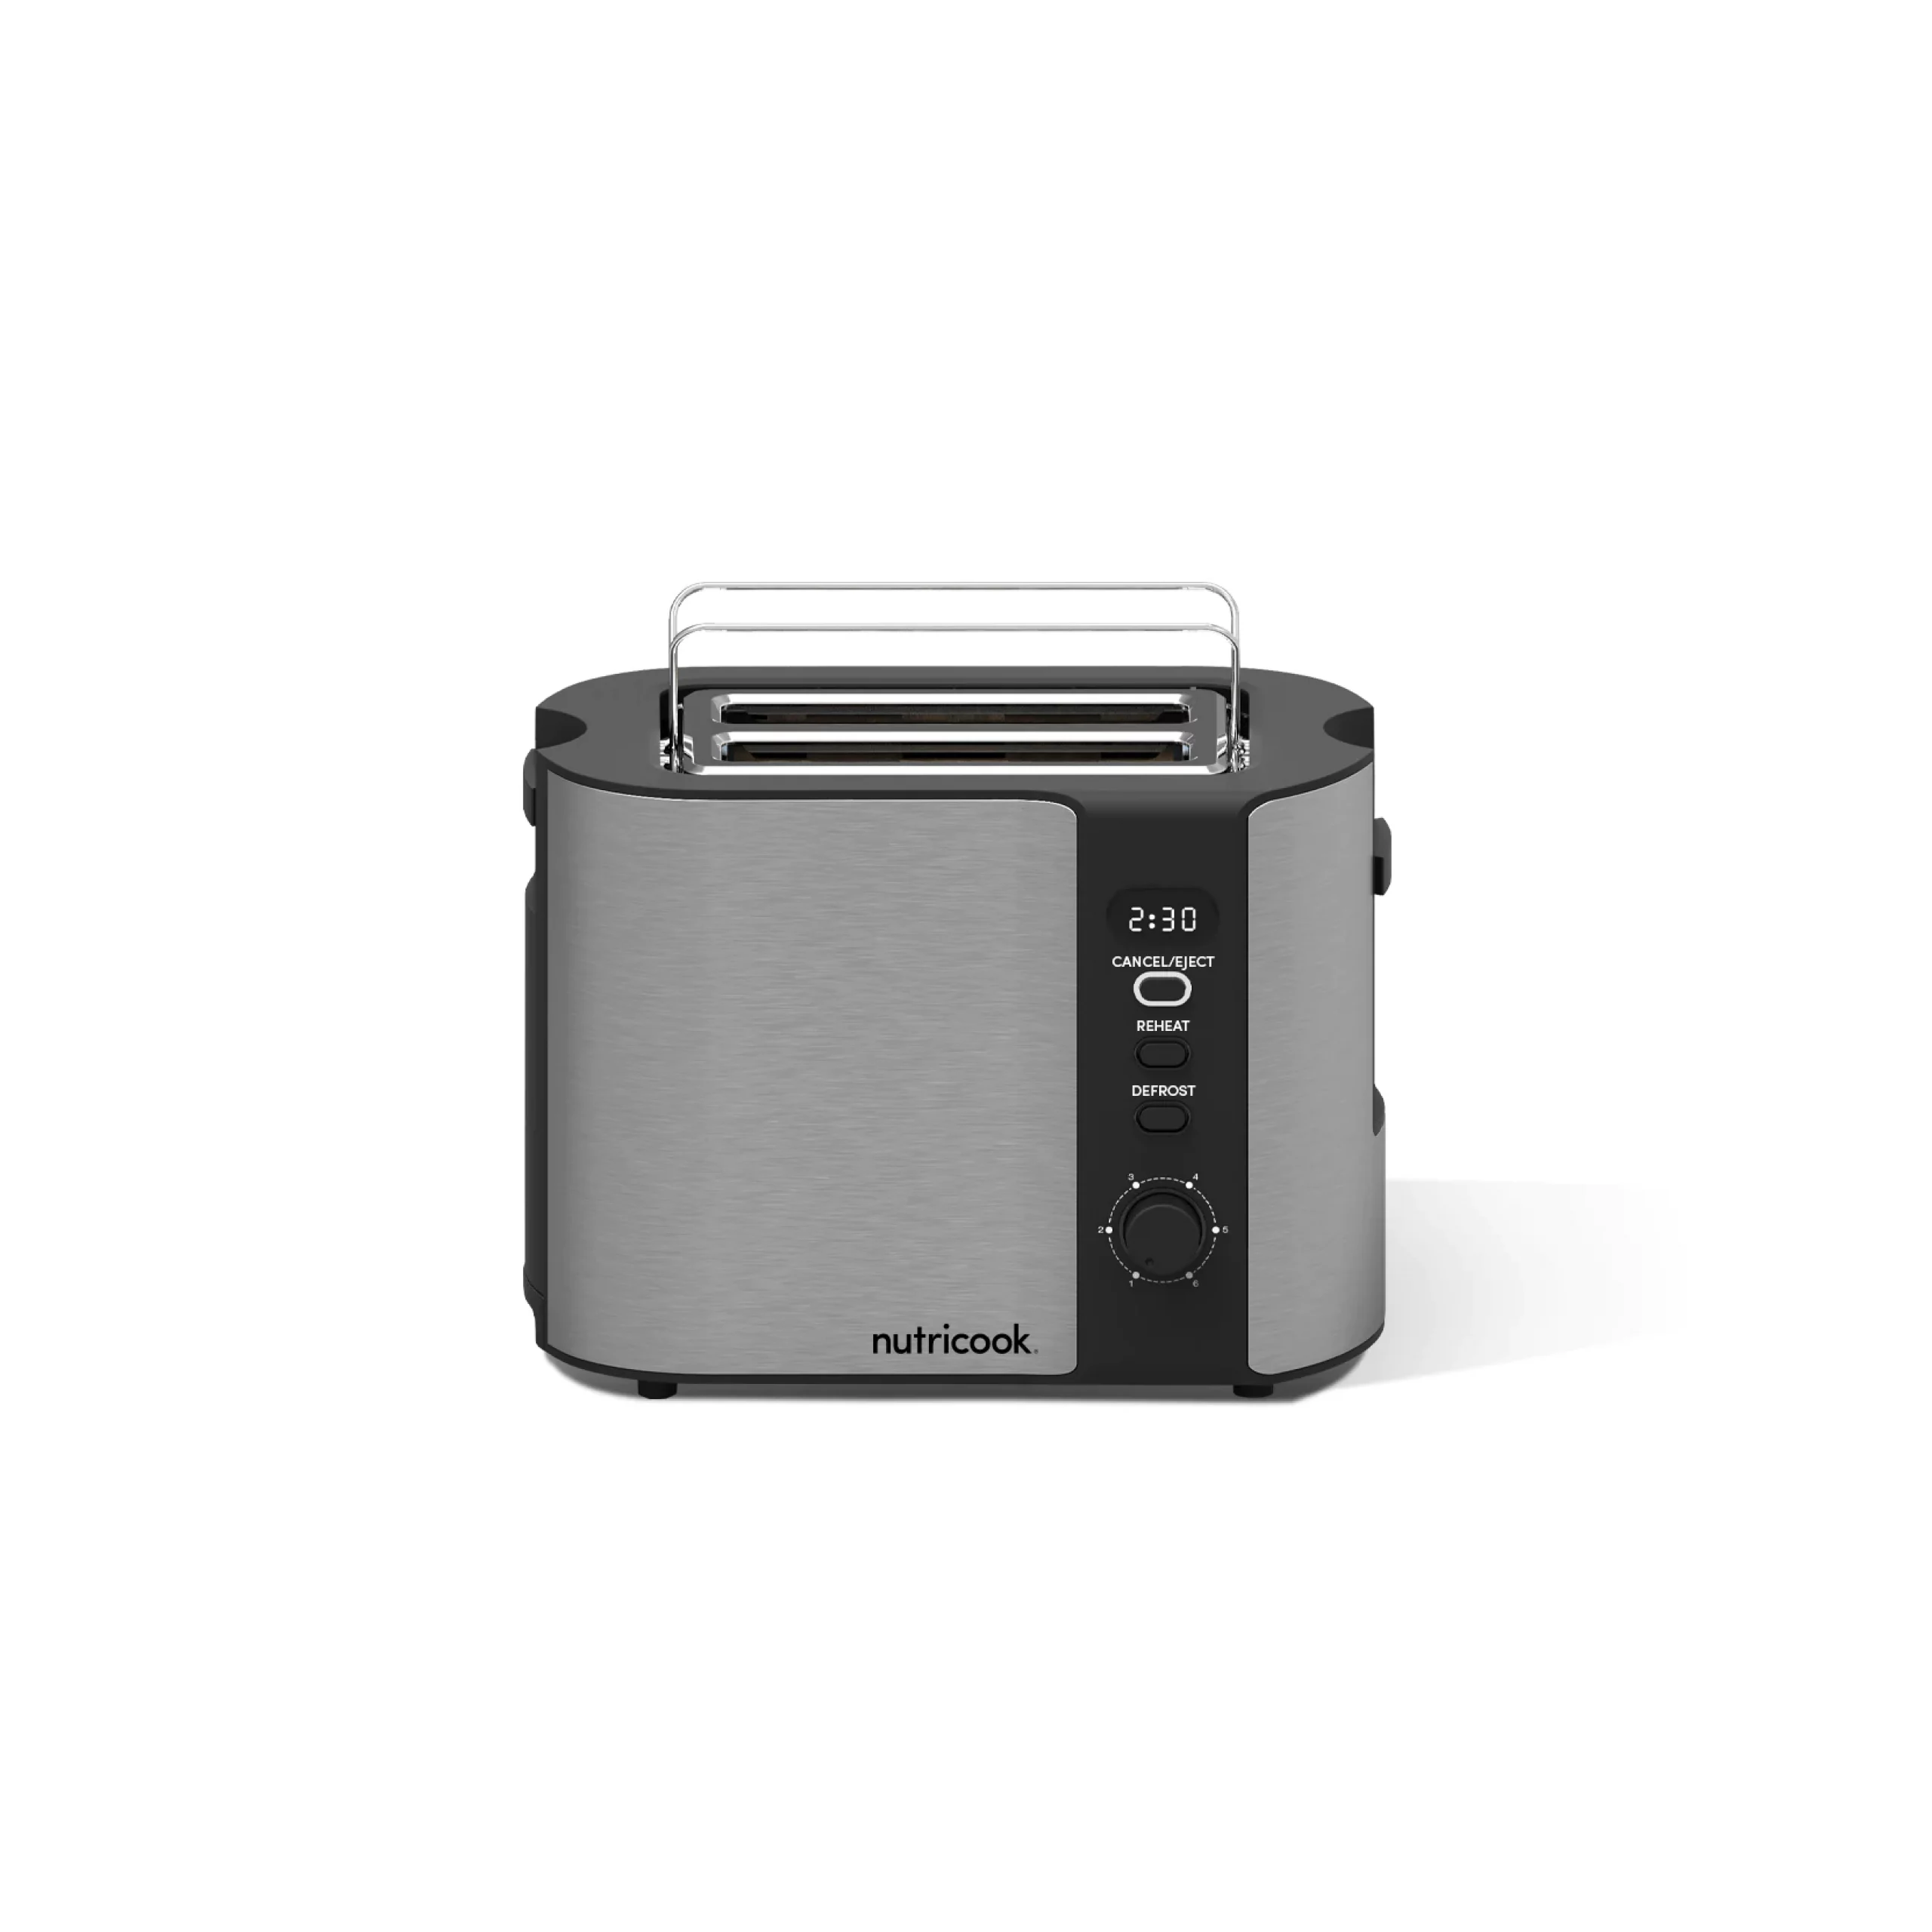 https://aot-electronics.com/wp-content/uploads/2023/04/website-prod-img-covers_25.-Nutricook-Digital-Toaster-2-Slice-scaled.webp